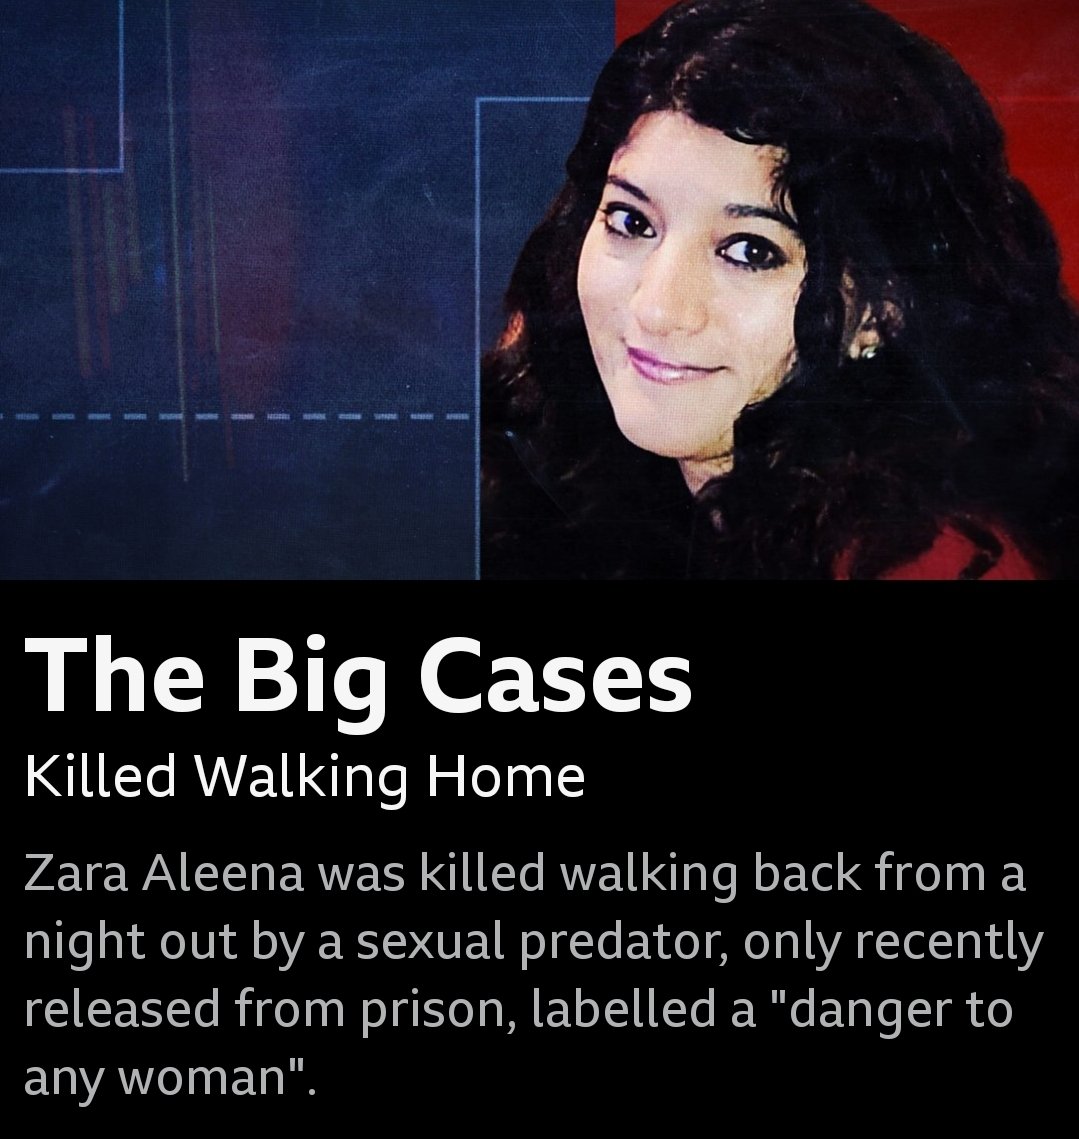 Her name was #ZaraAleena